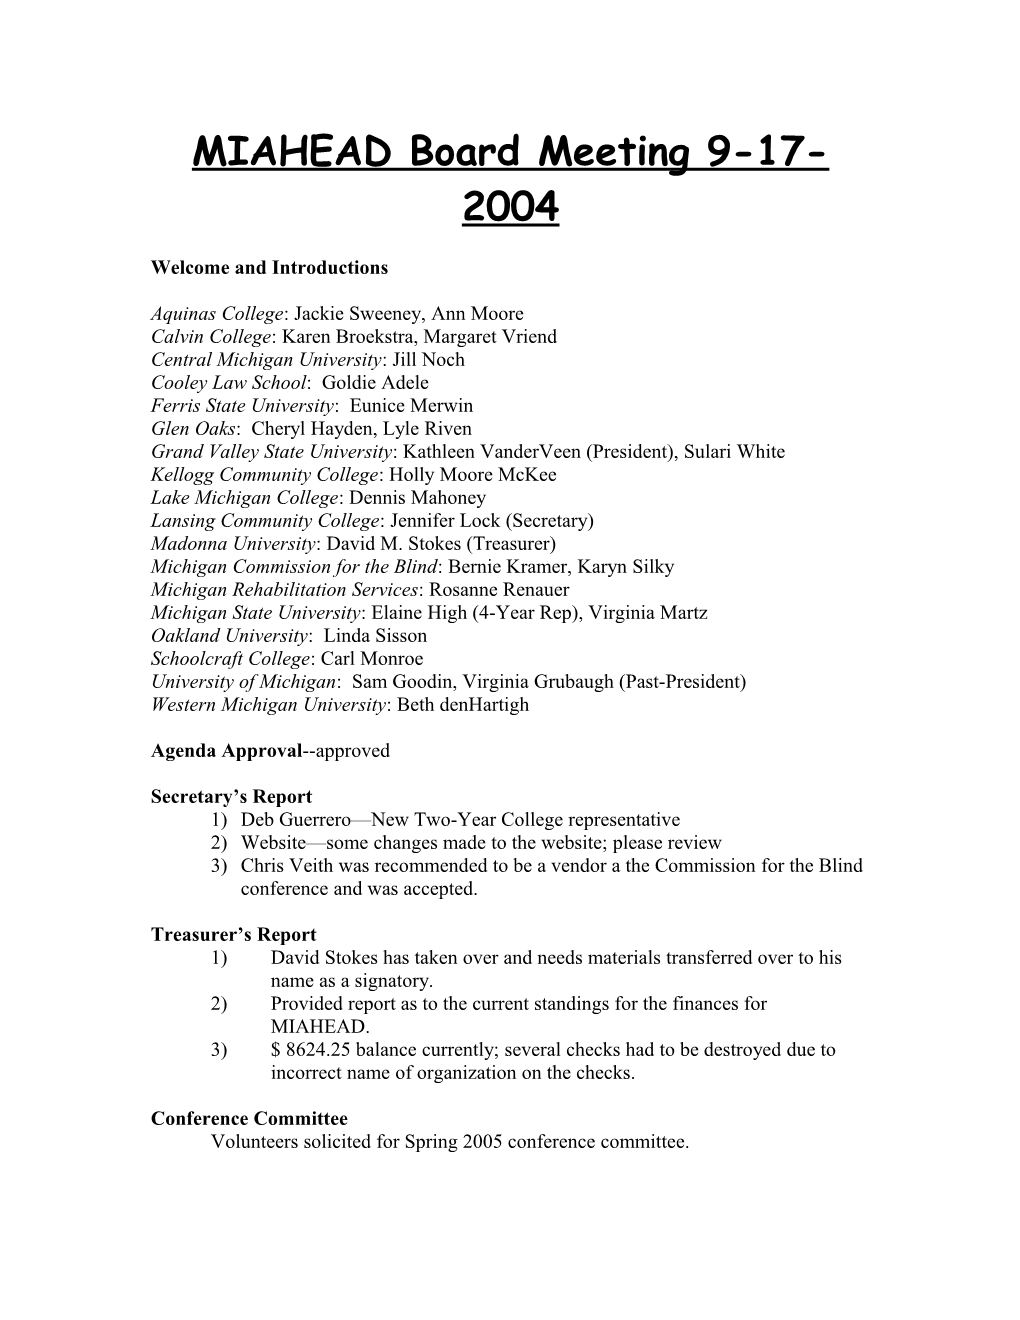 MIAHEAD Board Meeting 9-17-2004